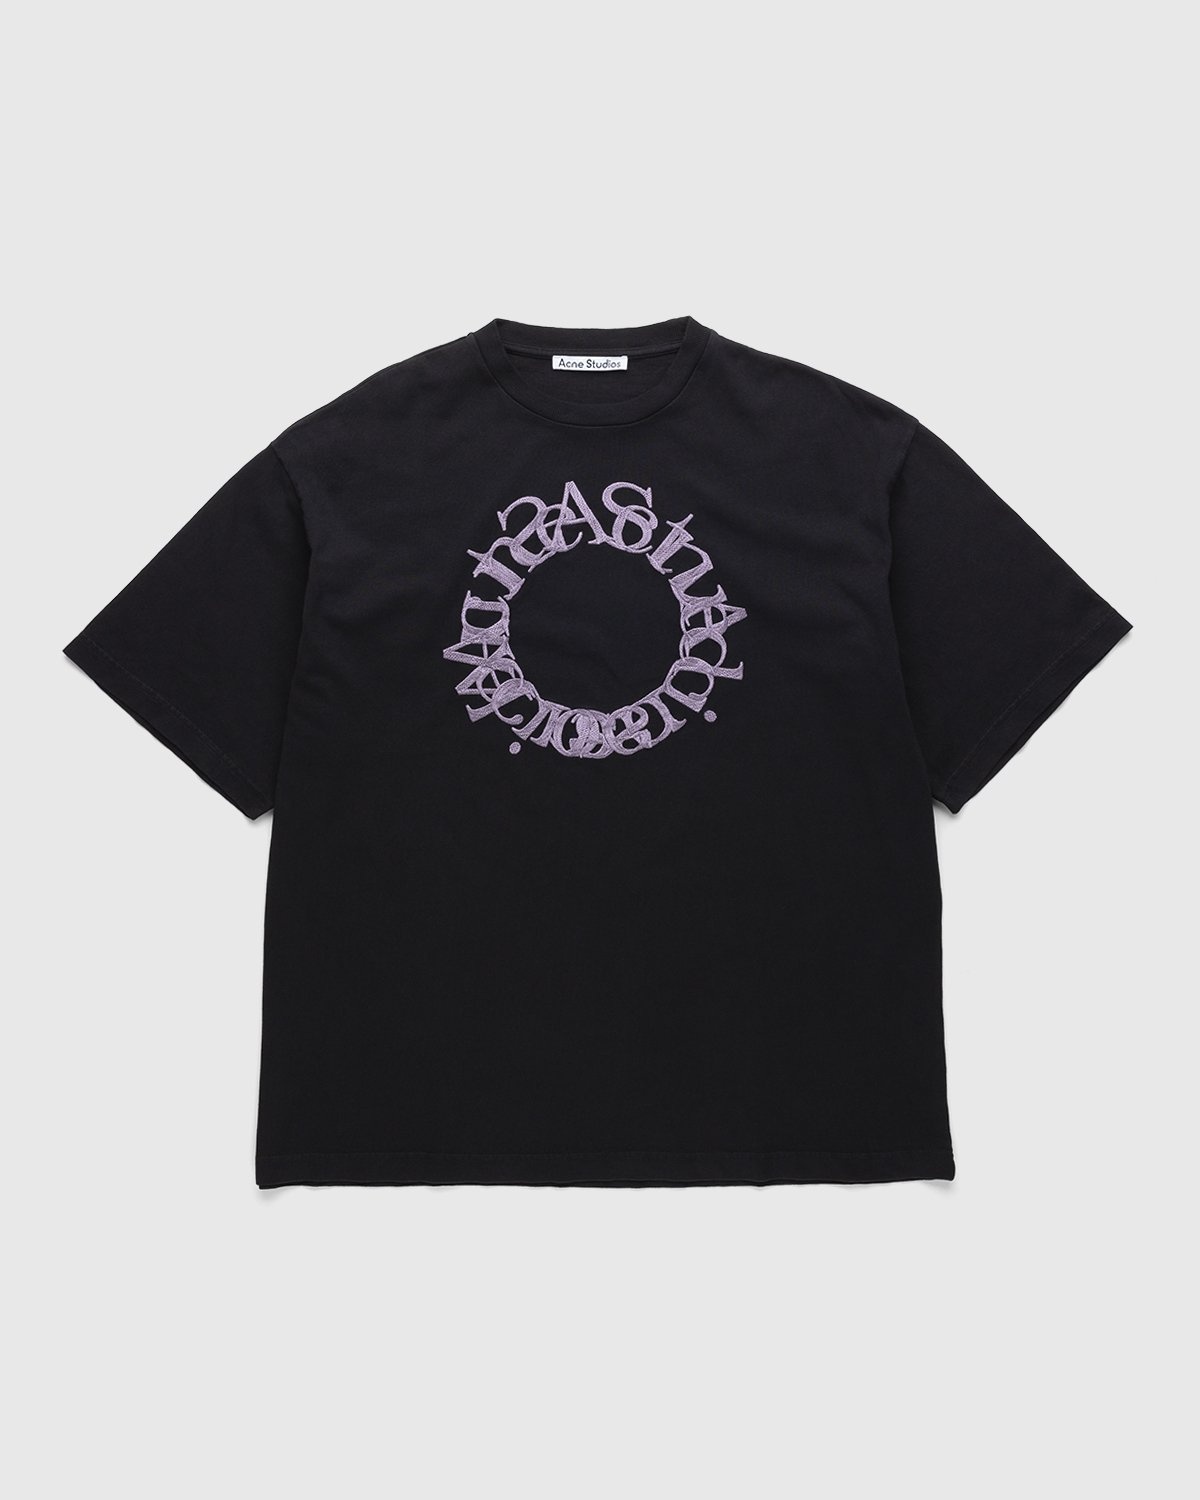 Acne Studios – Cotton Logo T-Shirt Black - Tops - Black - Image 1